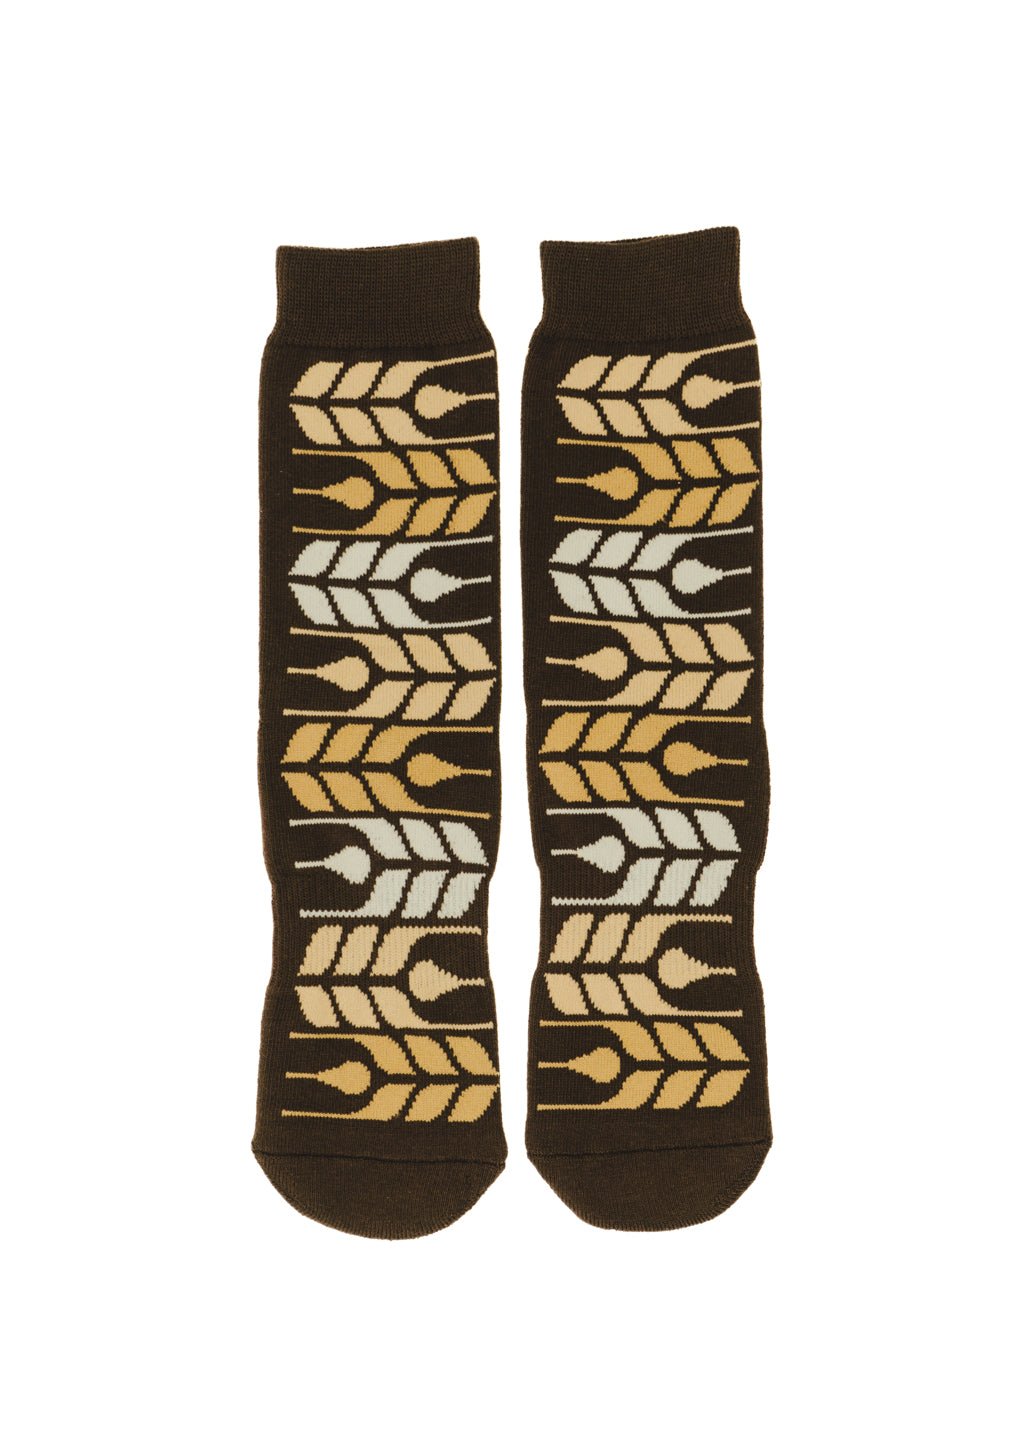 Grain Socks | Oak - Hardpressed Print Studio Inc.